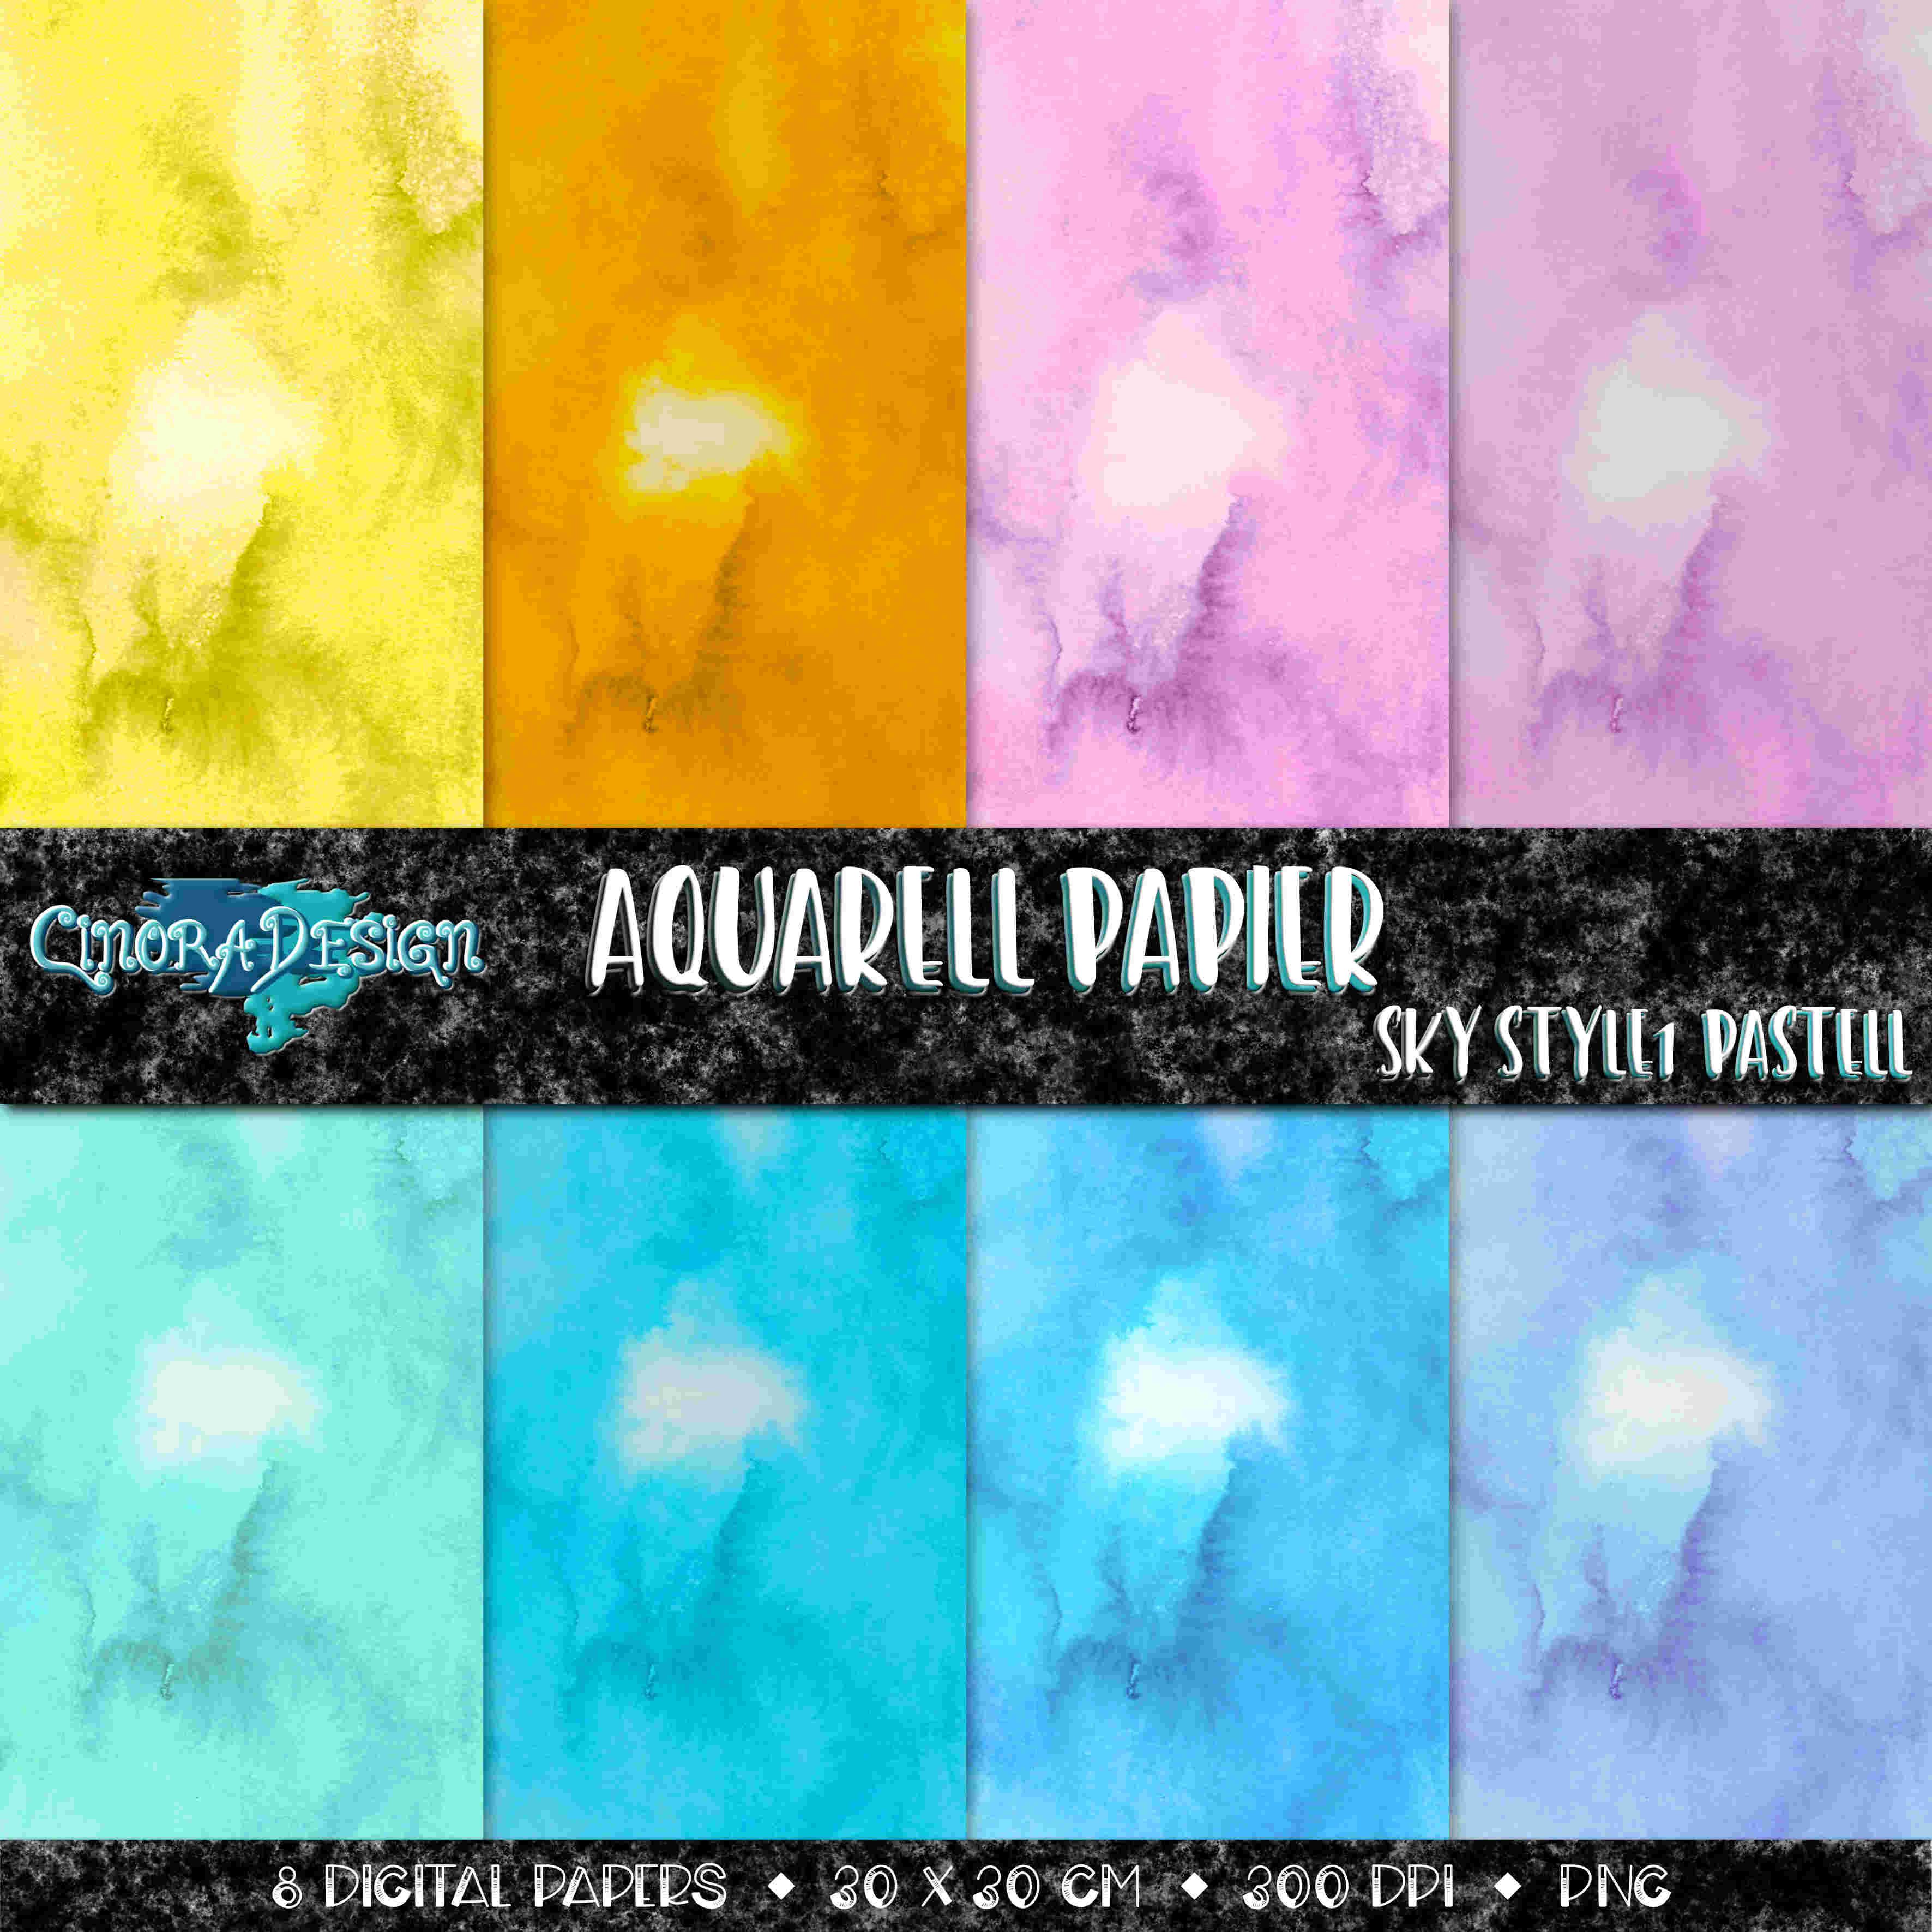 Aquarell Papier_SkyStyle1 Pastell Farben_CinoraDesign